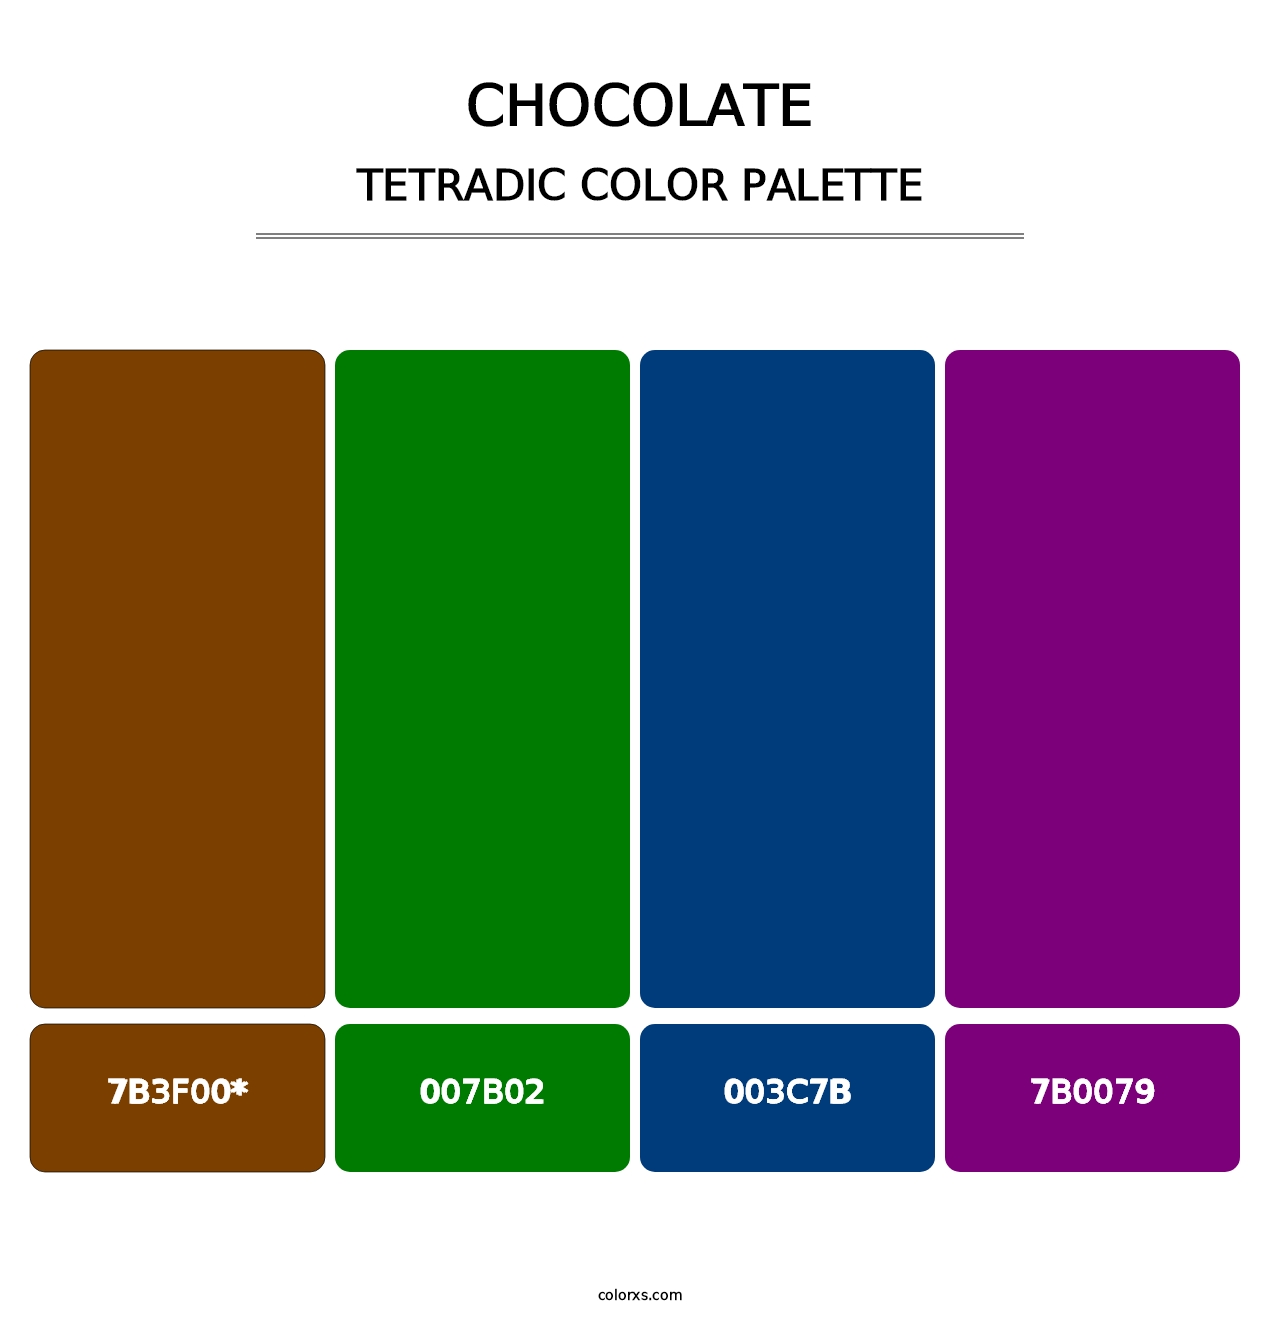 Chocolate - Tetradic Color Palette